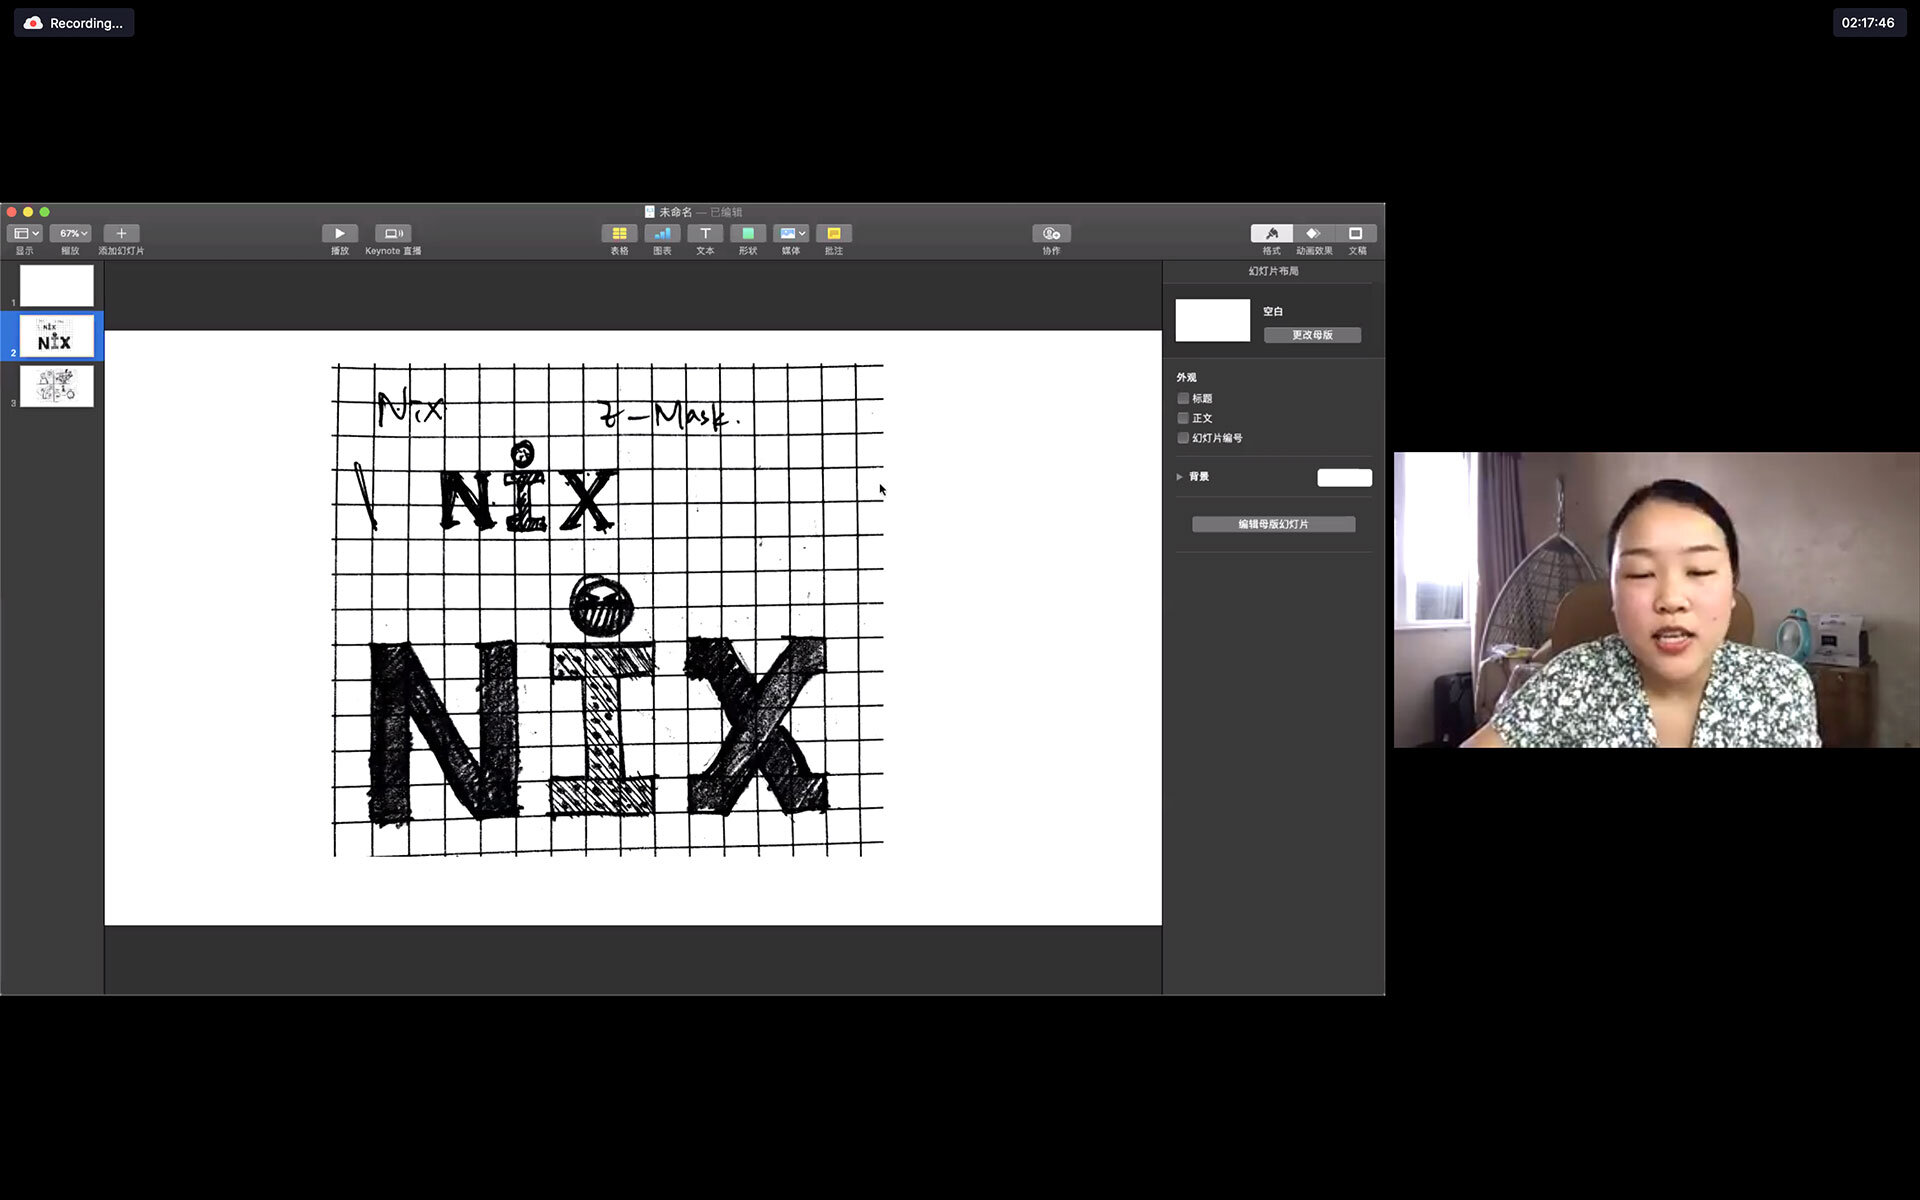 screen reading "nix"